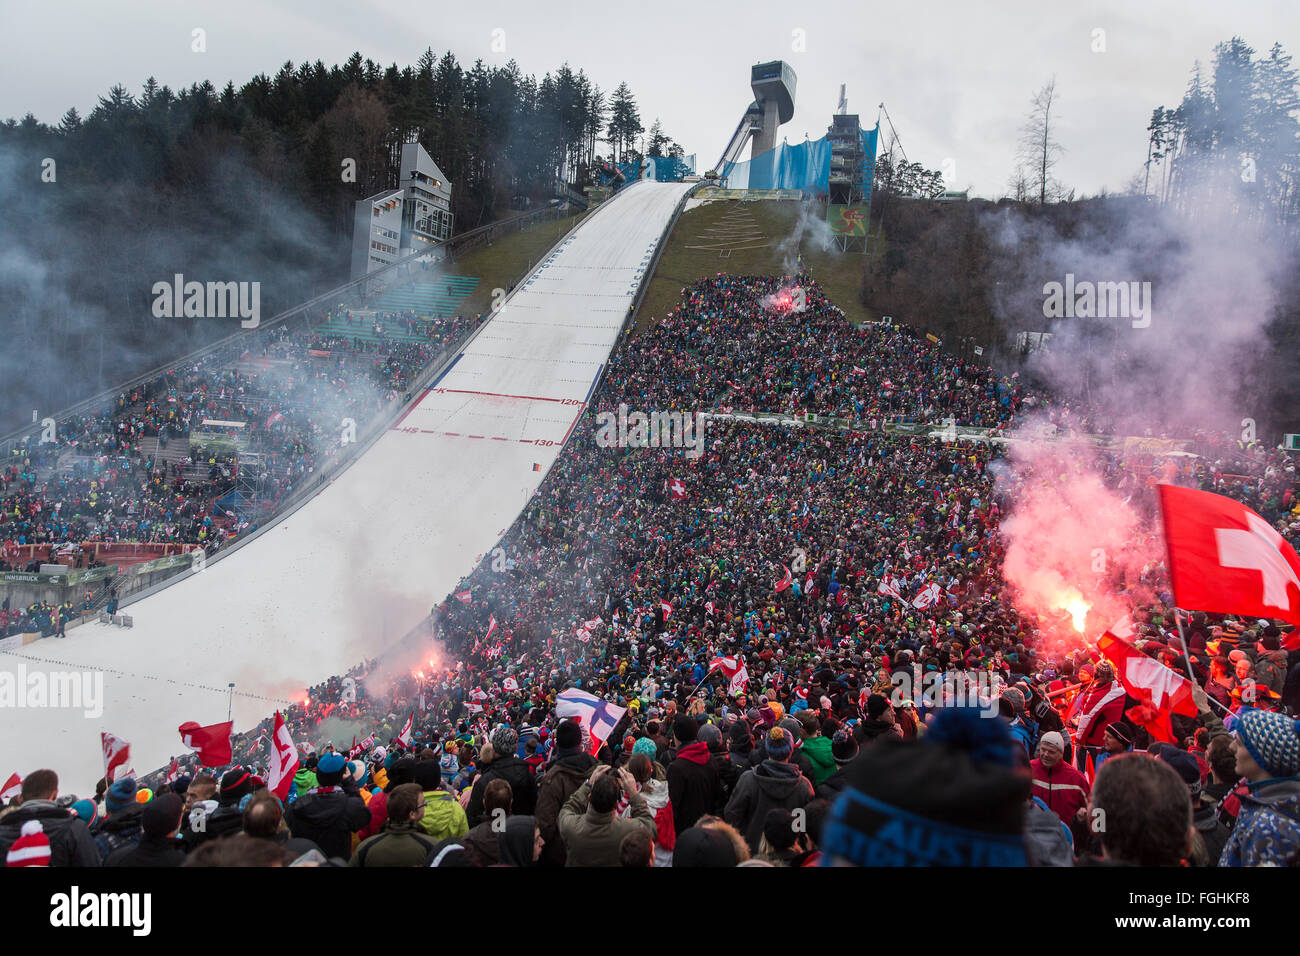 Ski Jumping championship, Austria Foto Stock